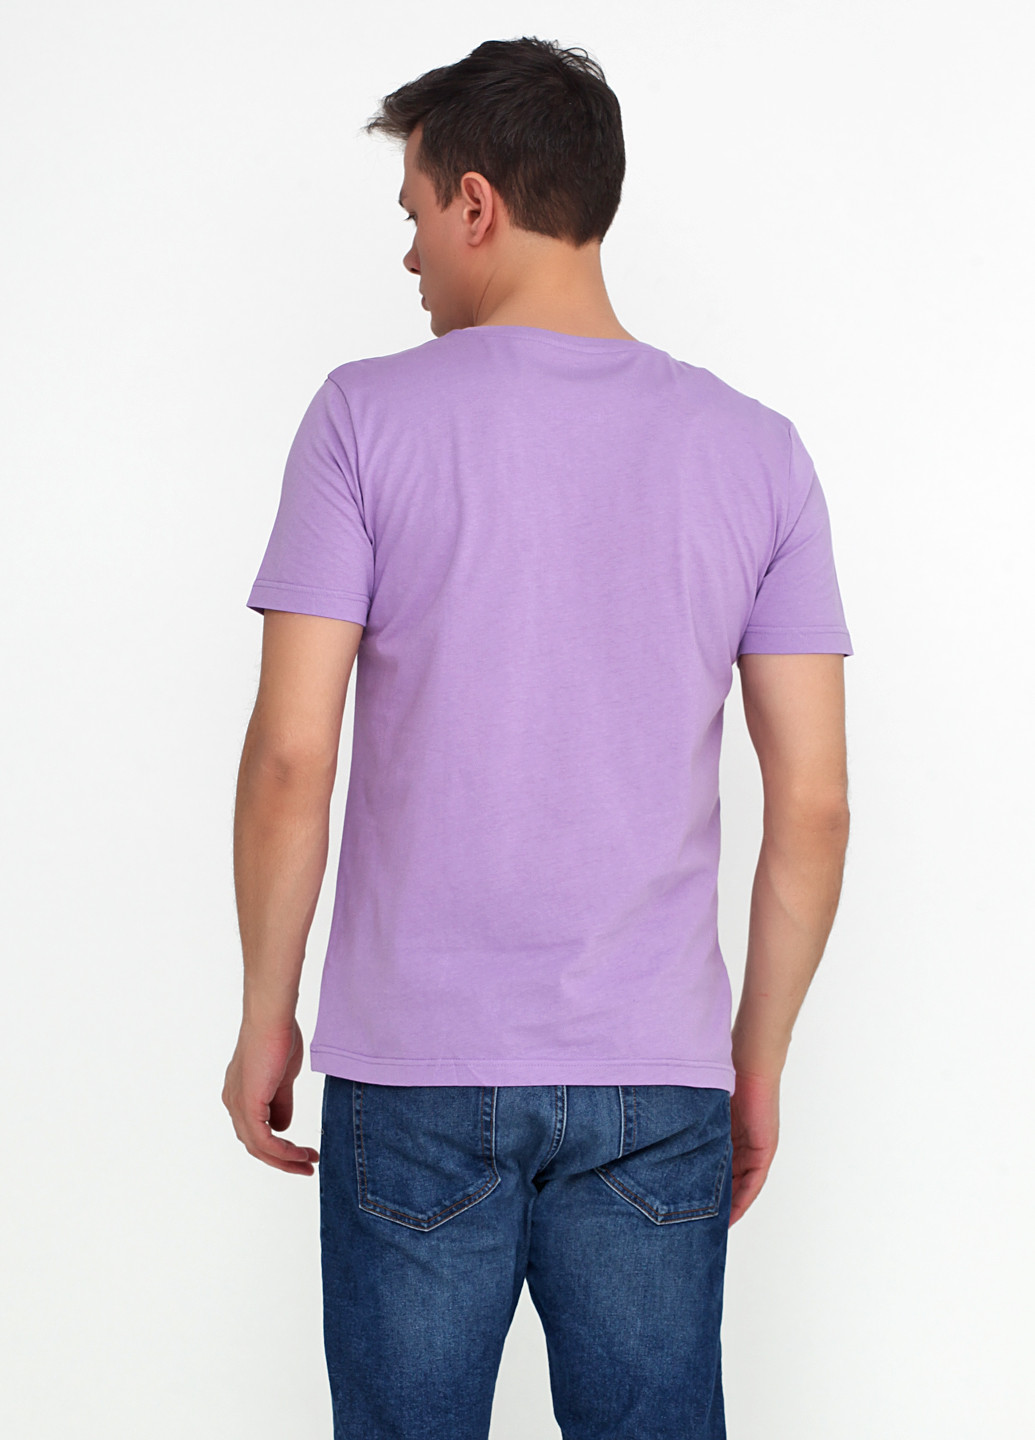 Светло-фиолетовая футболка Power